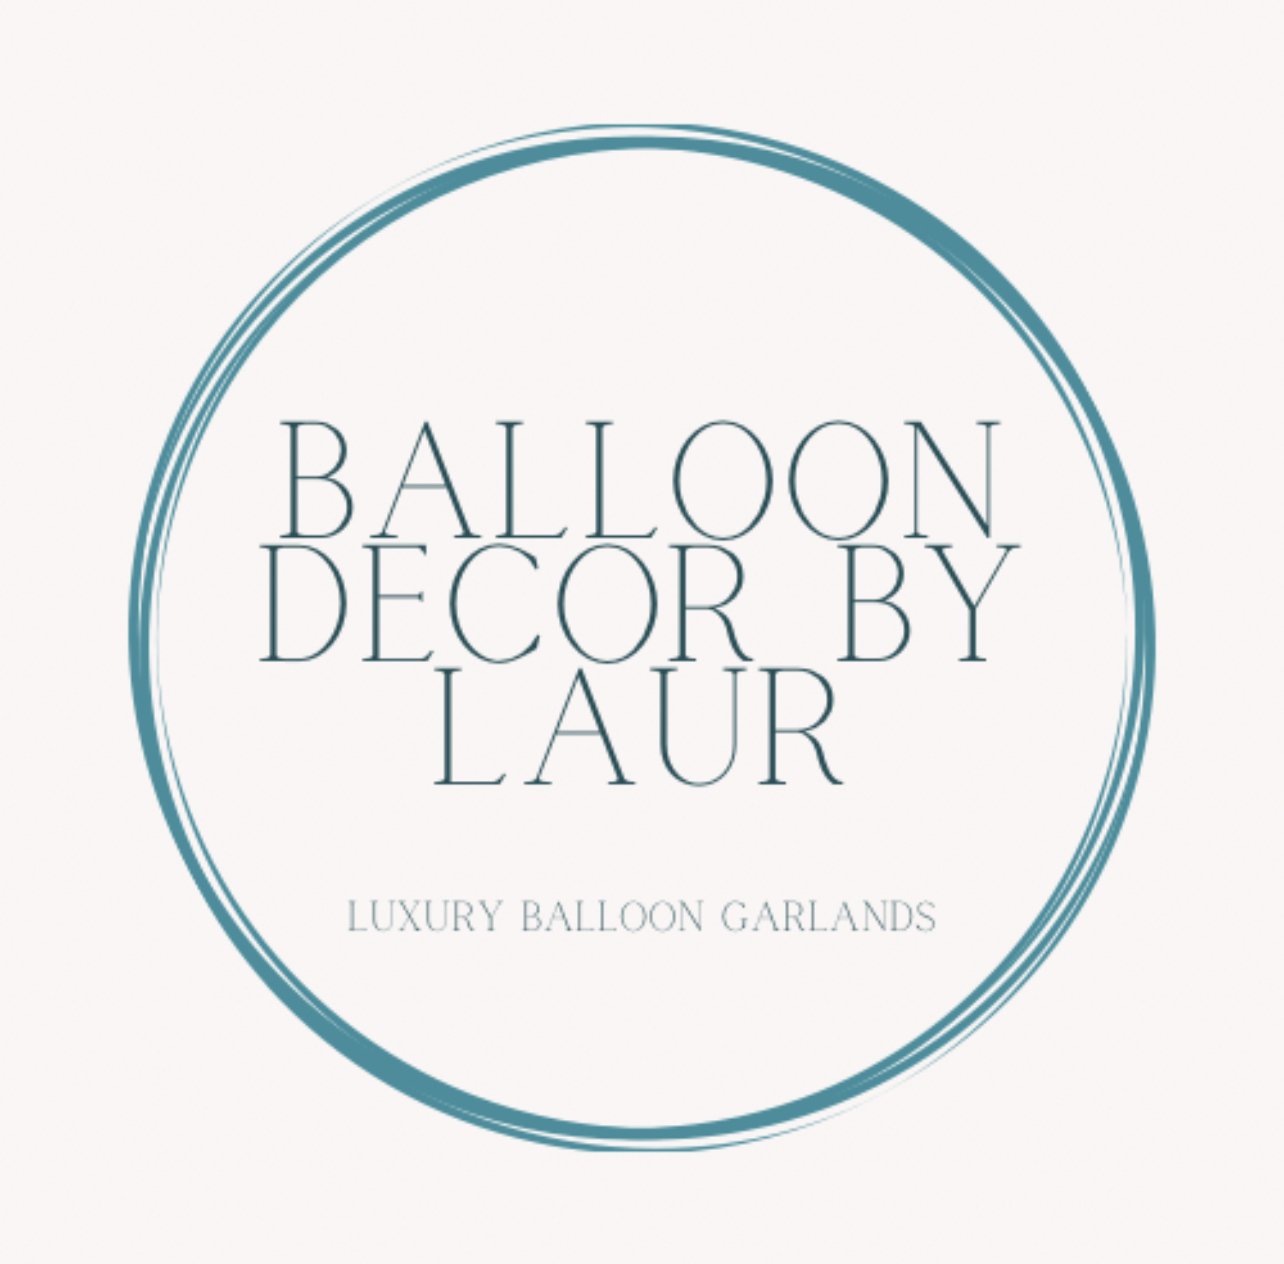 Balloon Decor By Laur